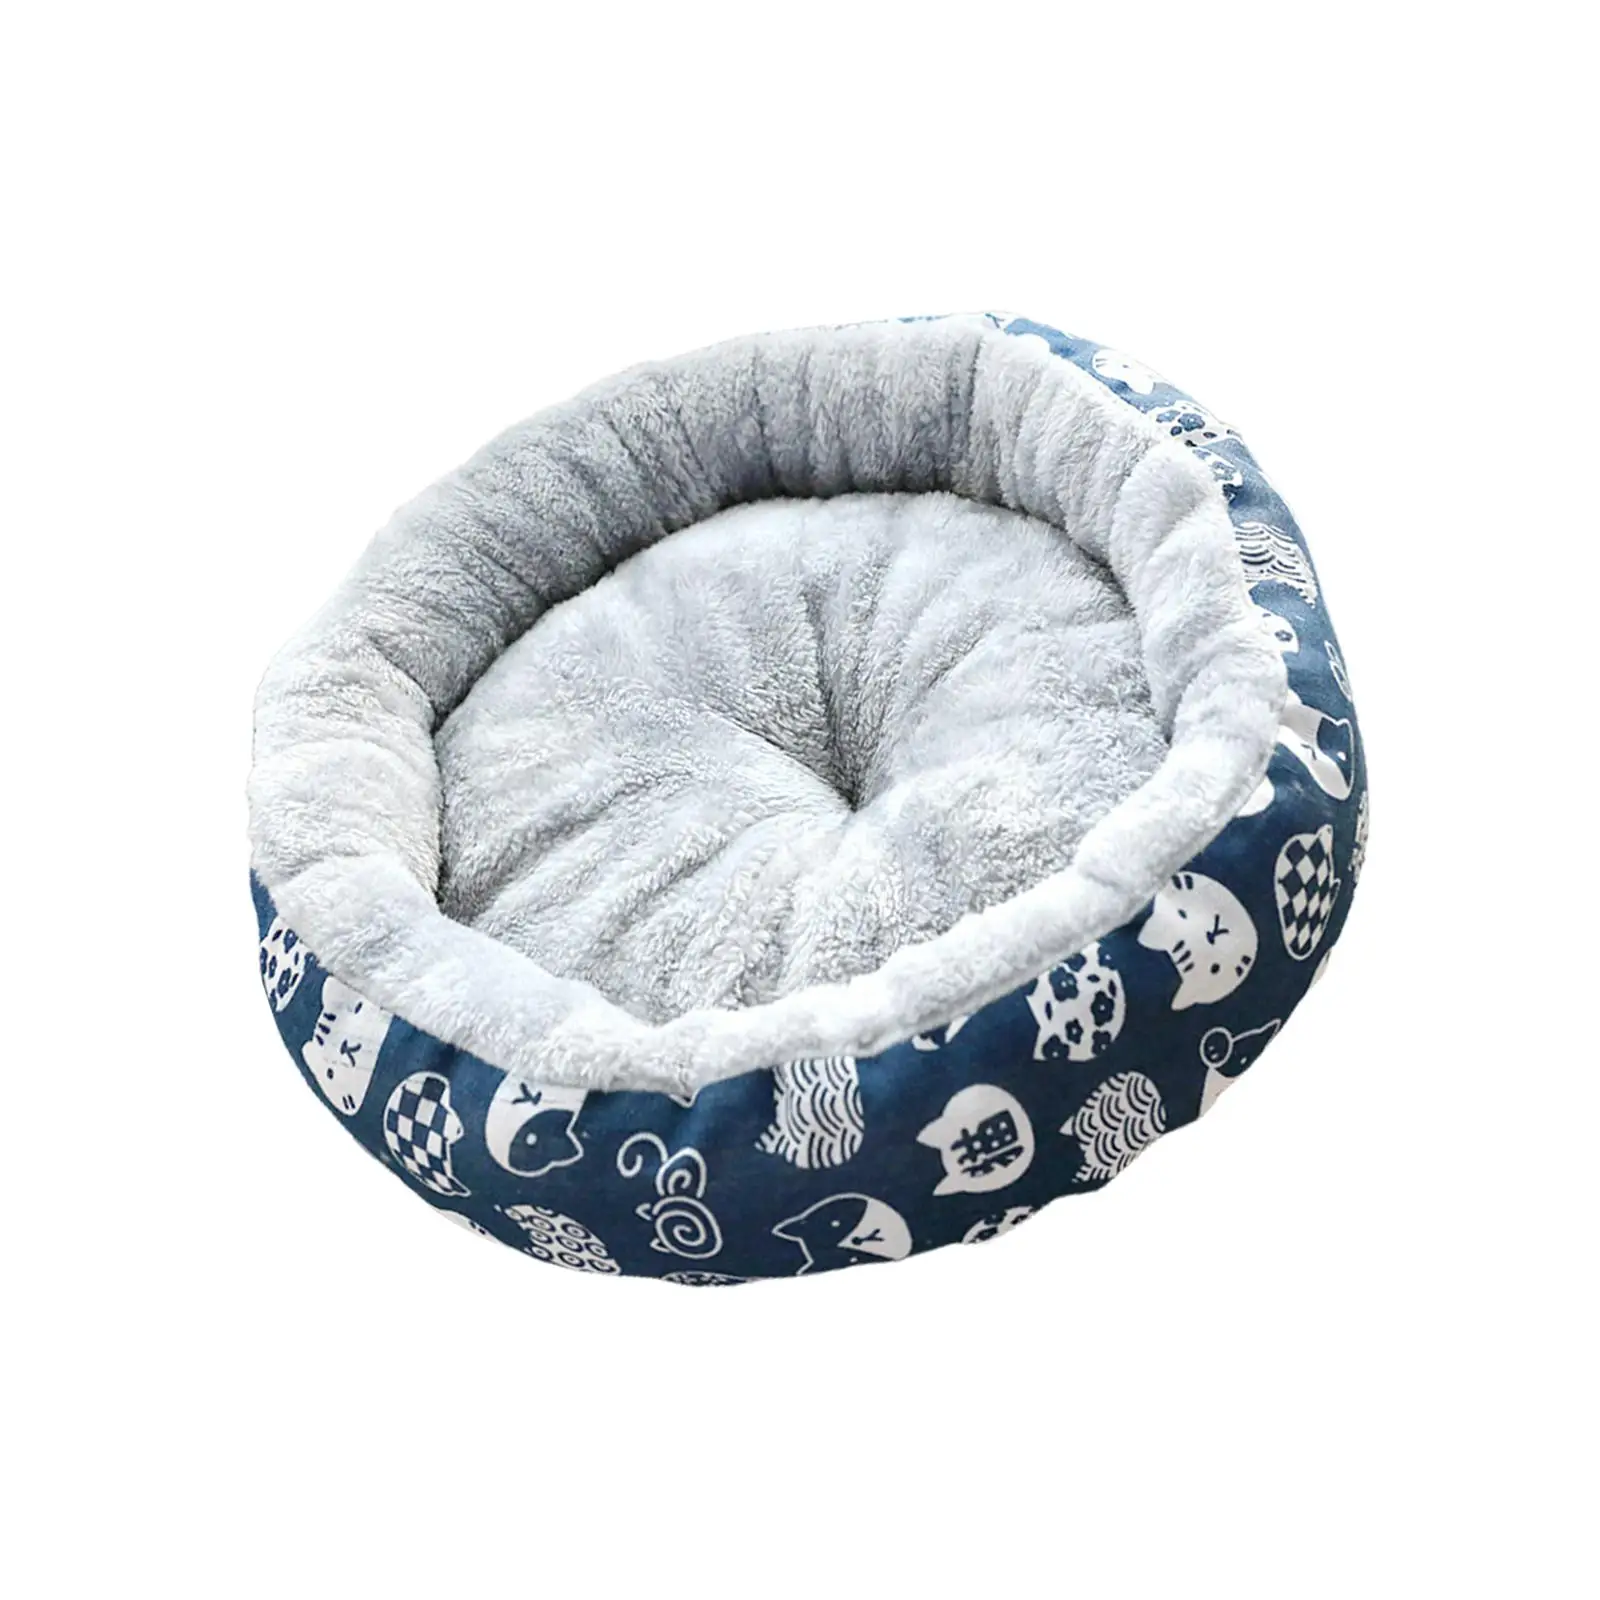 Cat Dog Bed Sleeping Mattress 45cm Indoor with Nonslip Bottom Kitty Kennel for Puppy Kitten